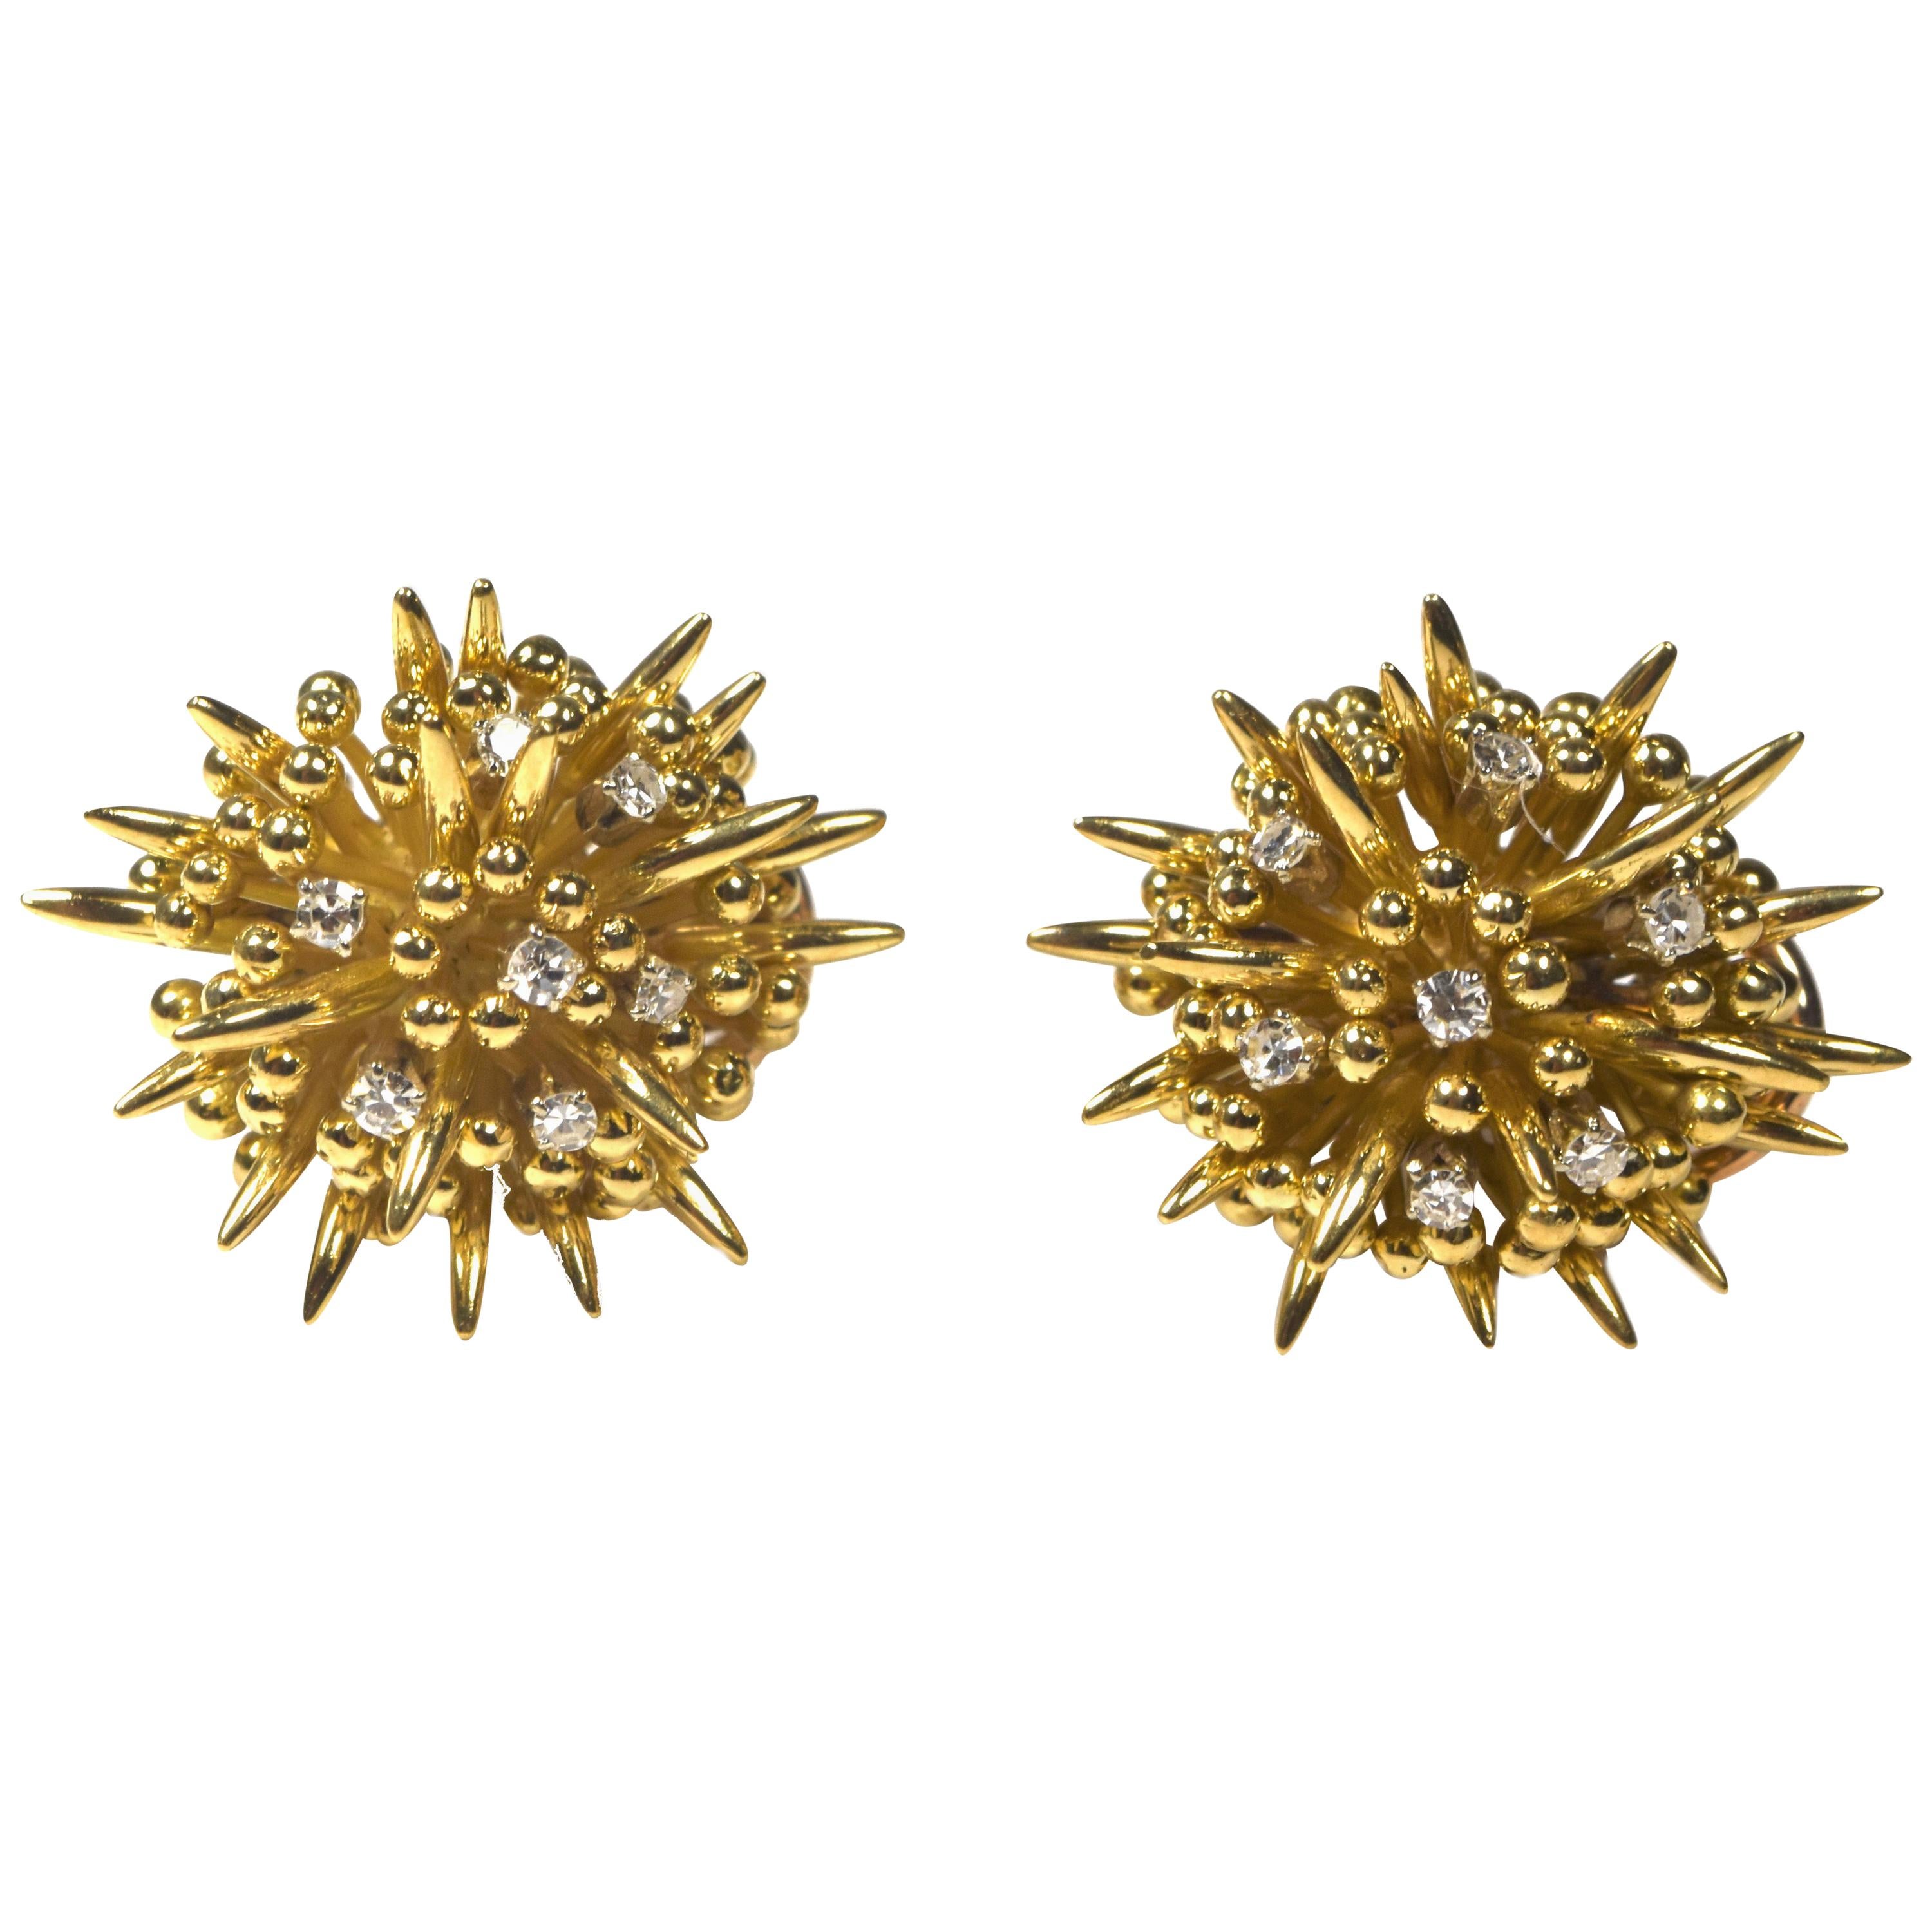 Rare Vintage Tiffany & Co. "Sea Anemone" Yellow Gold Earrings